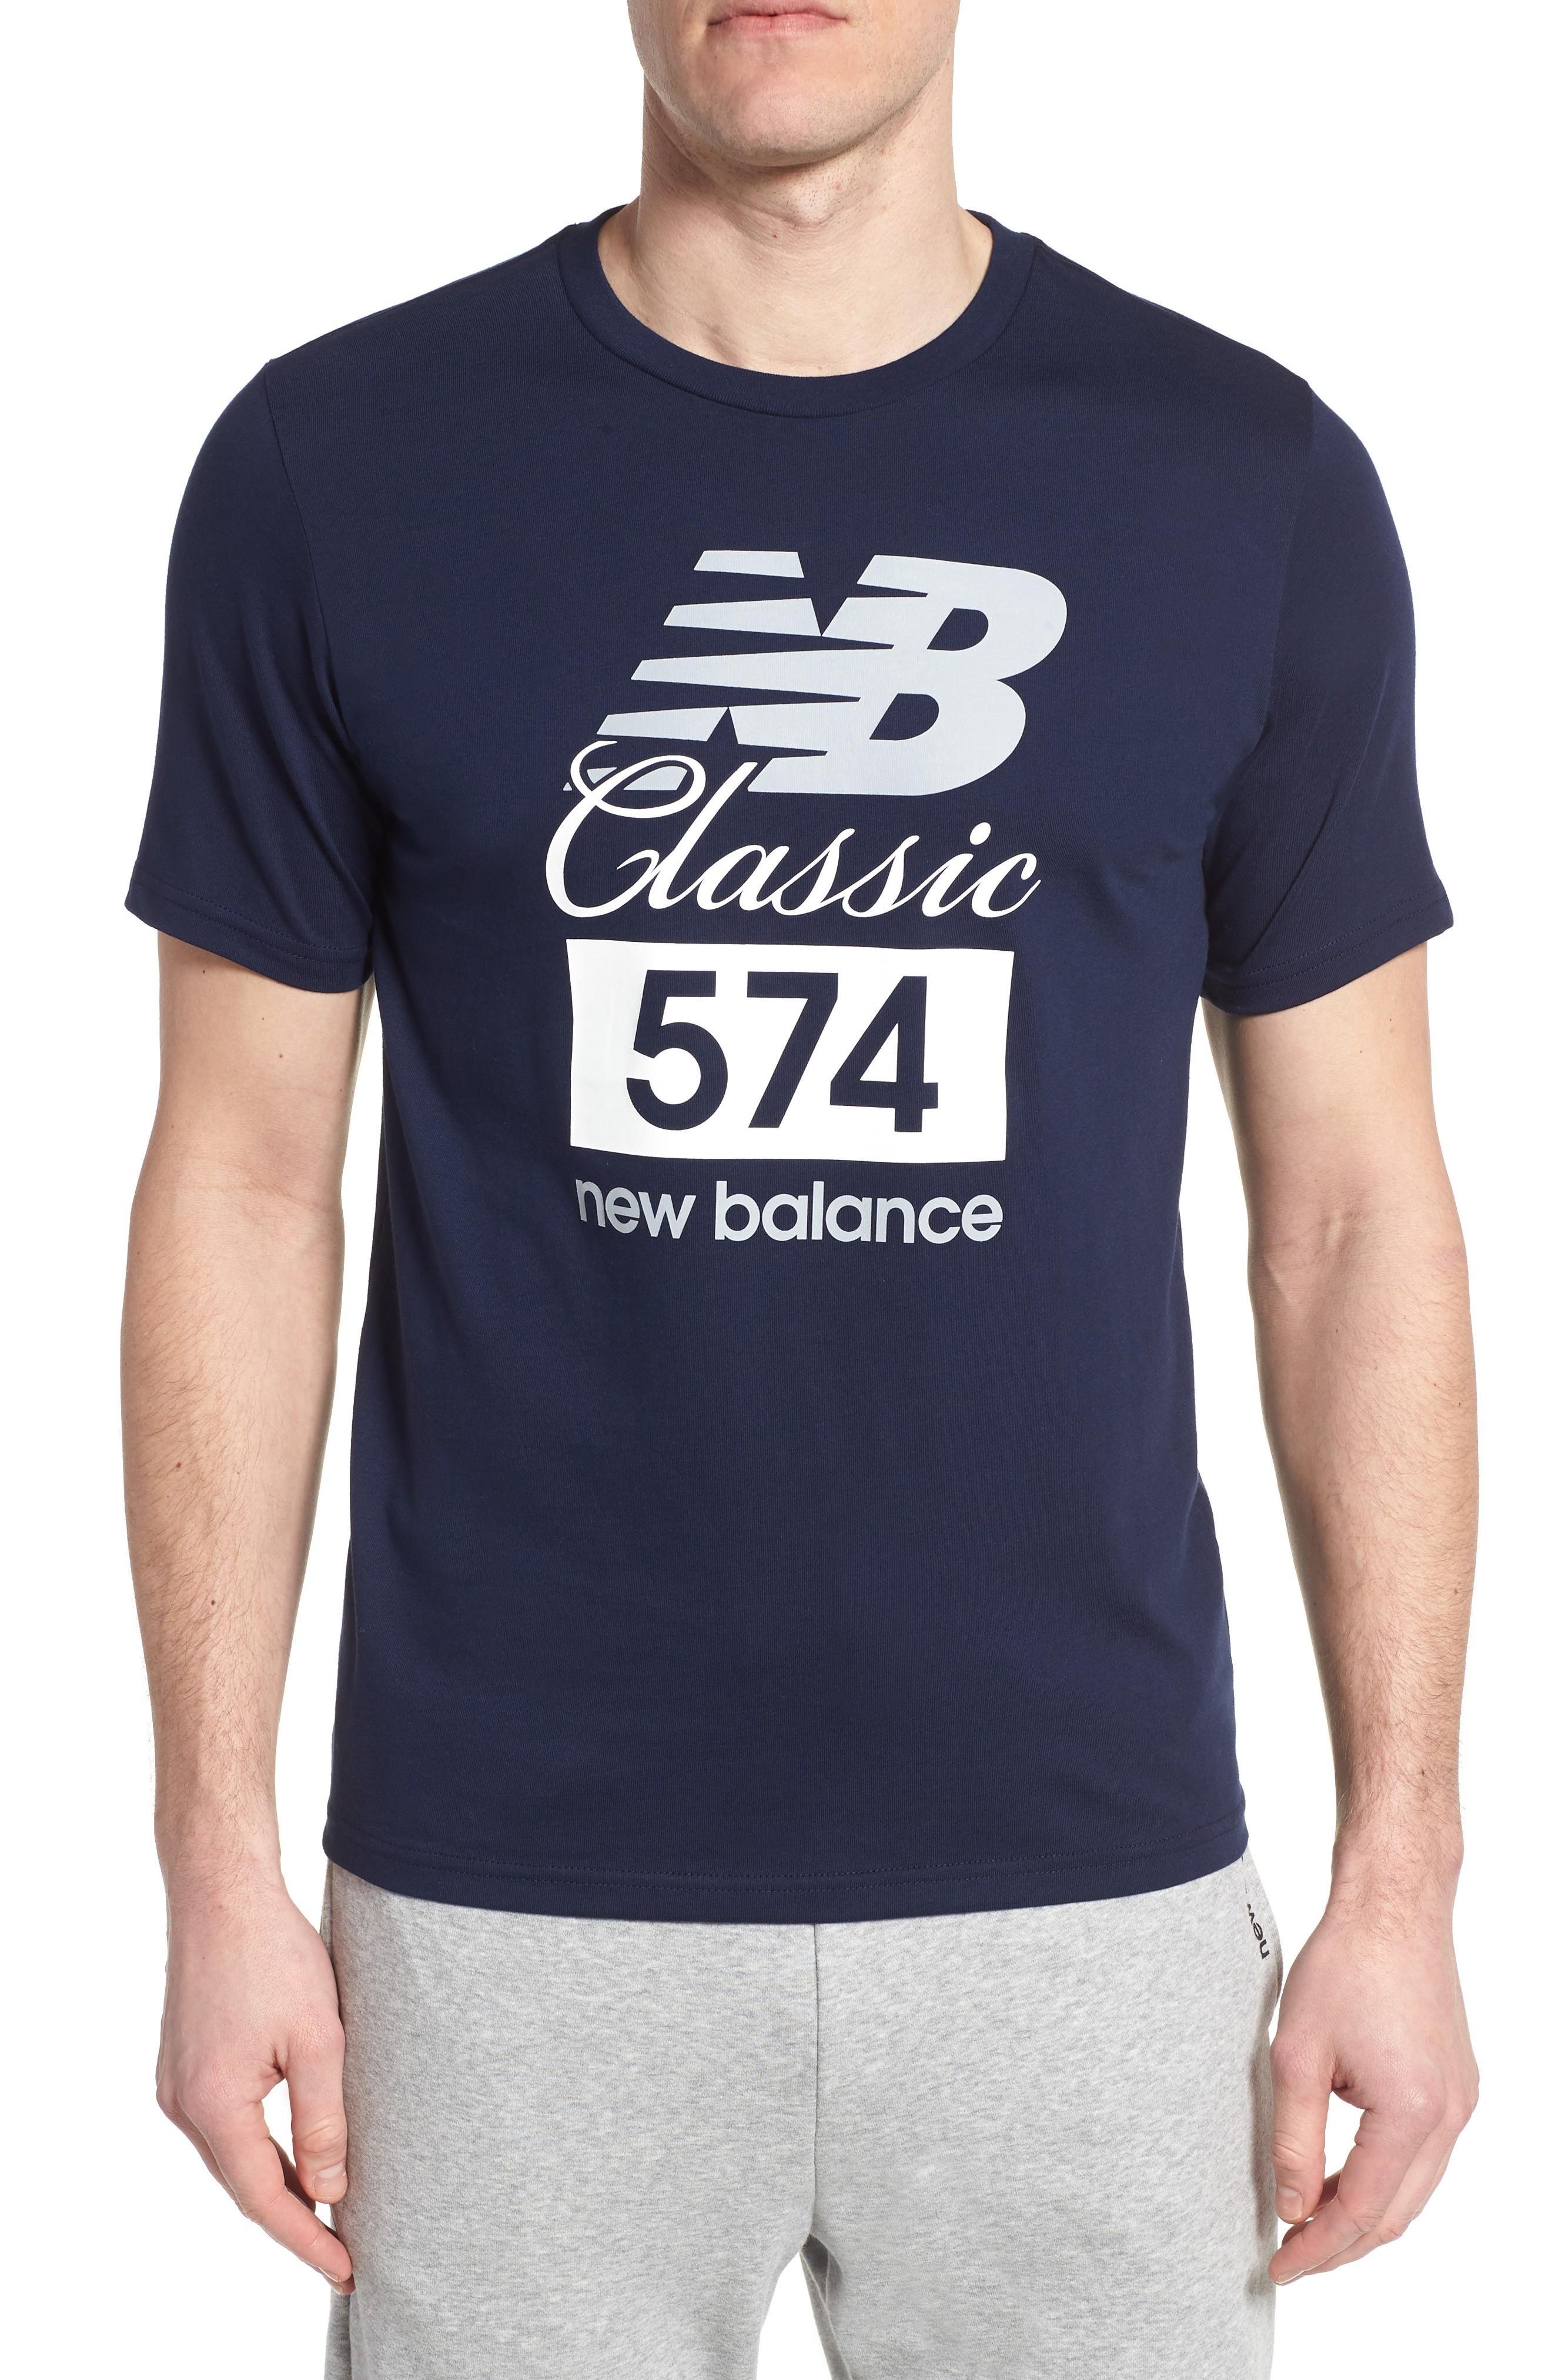 new balance 574 shirt